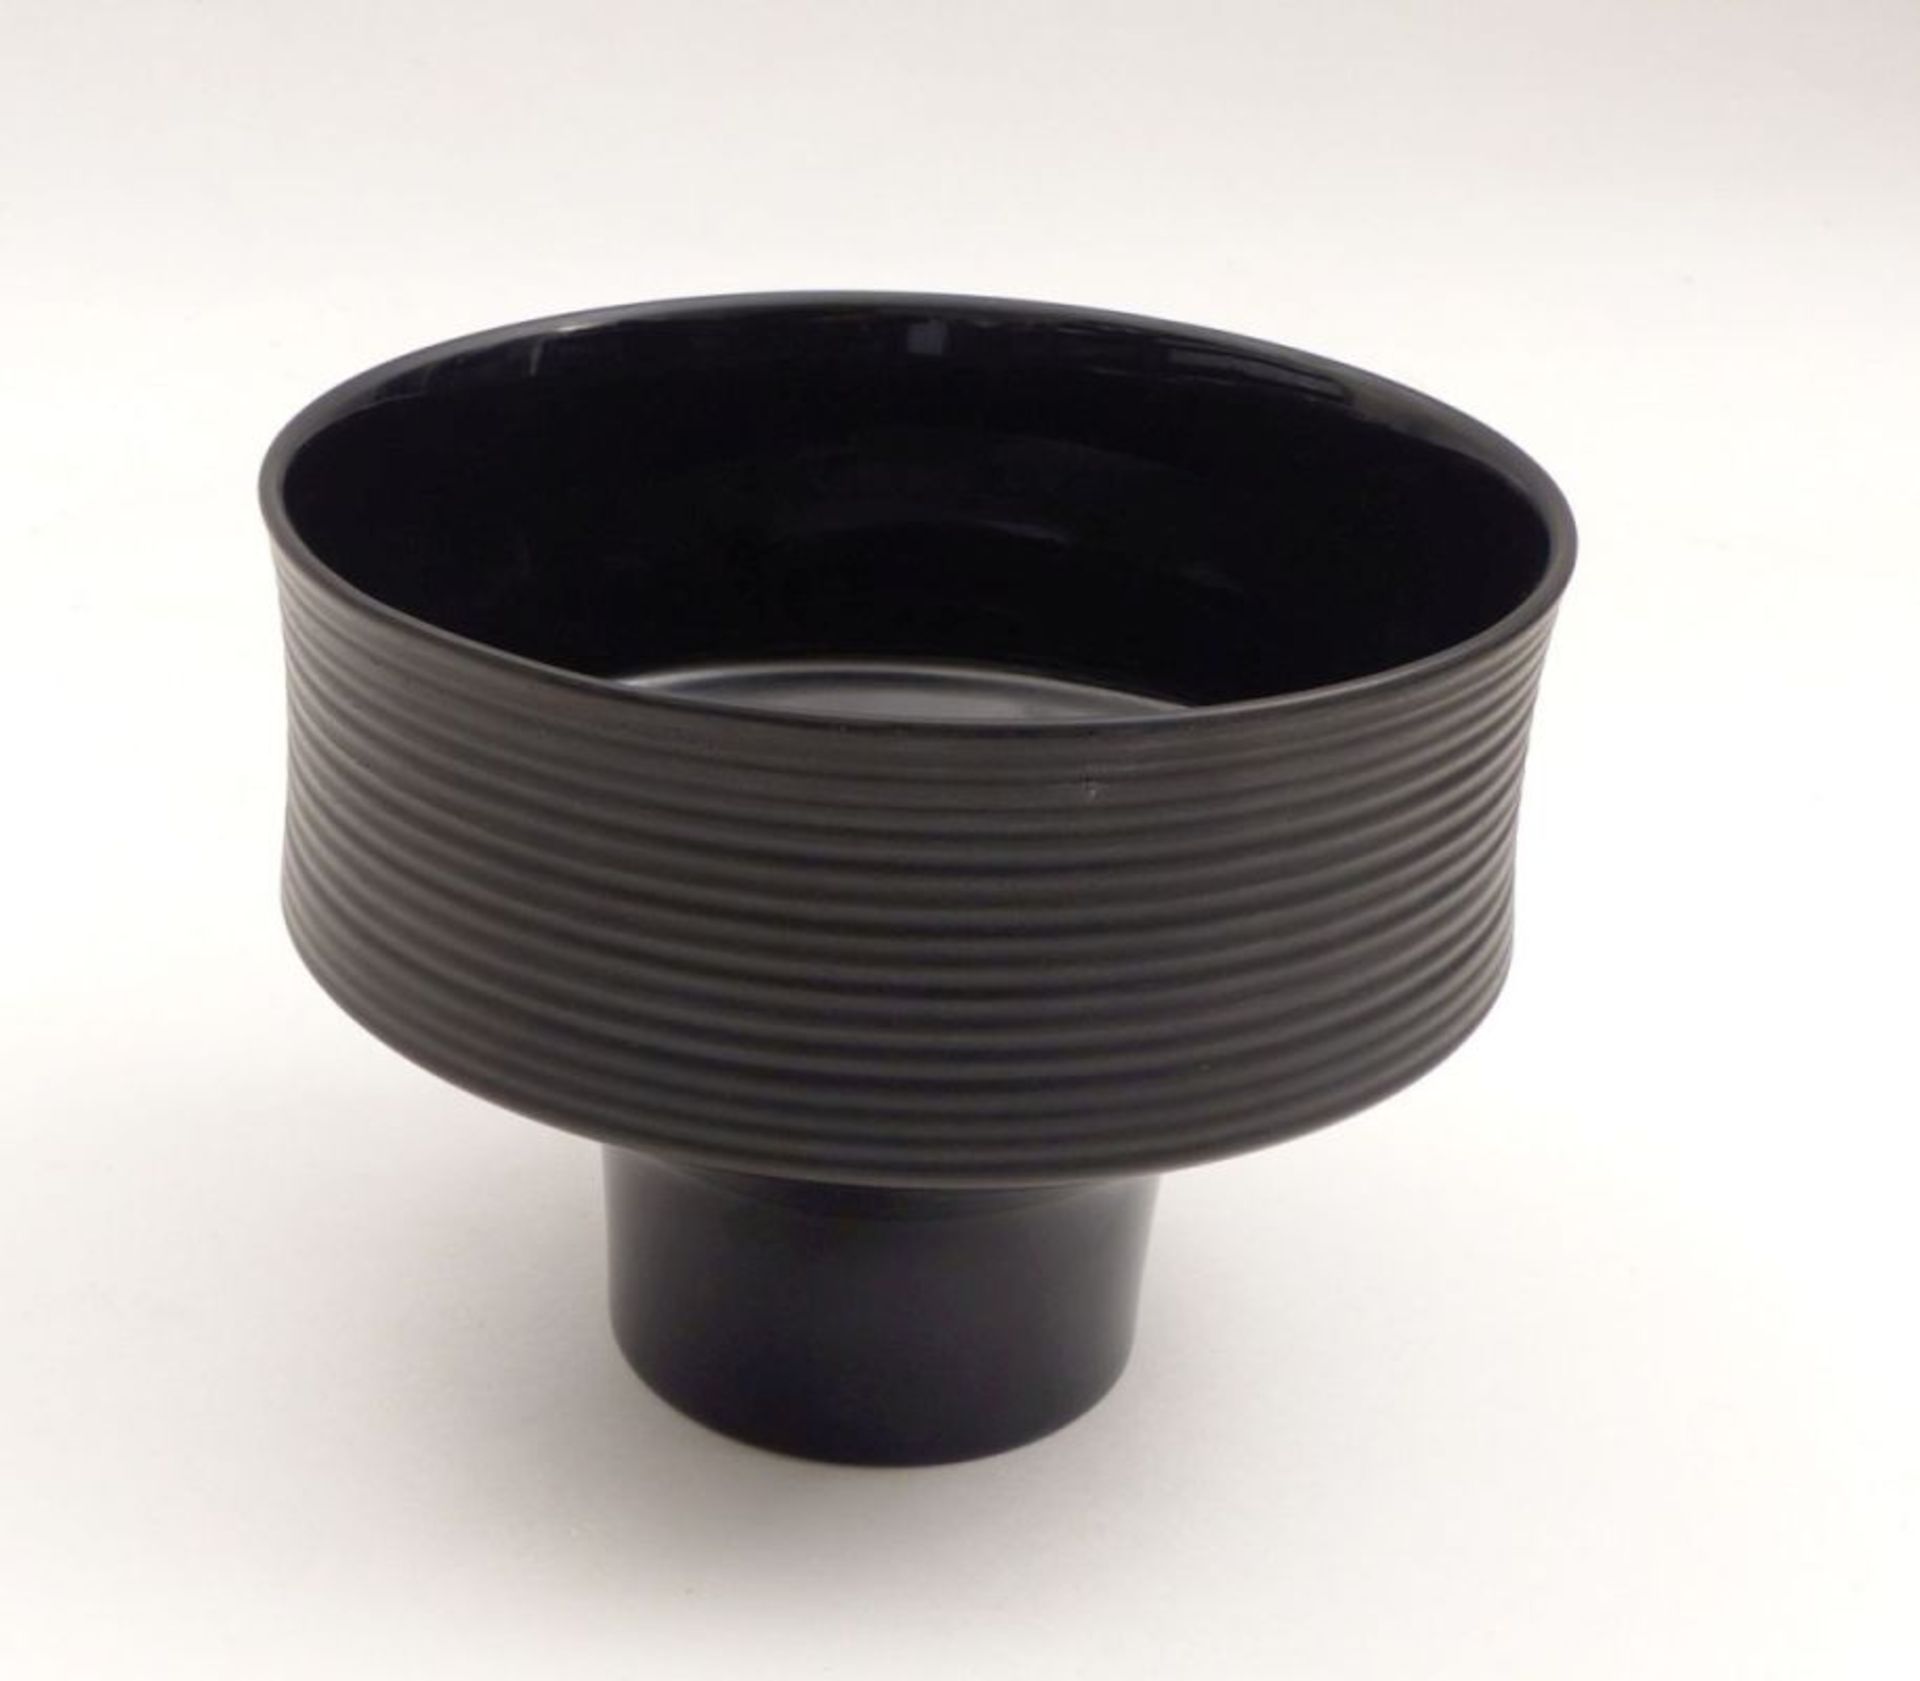 Wirkkala, Tapio''Porcelaine noire''- bowl(Hanko 1915-1985 Helsinki) For Rosenthal, studio line, - Bild 2 aus 4